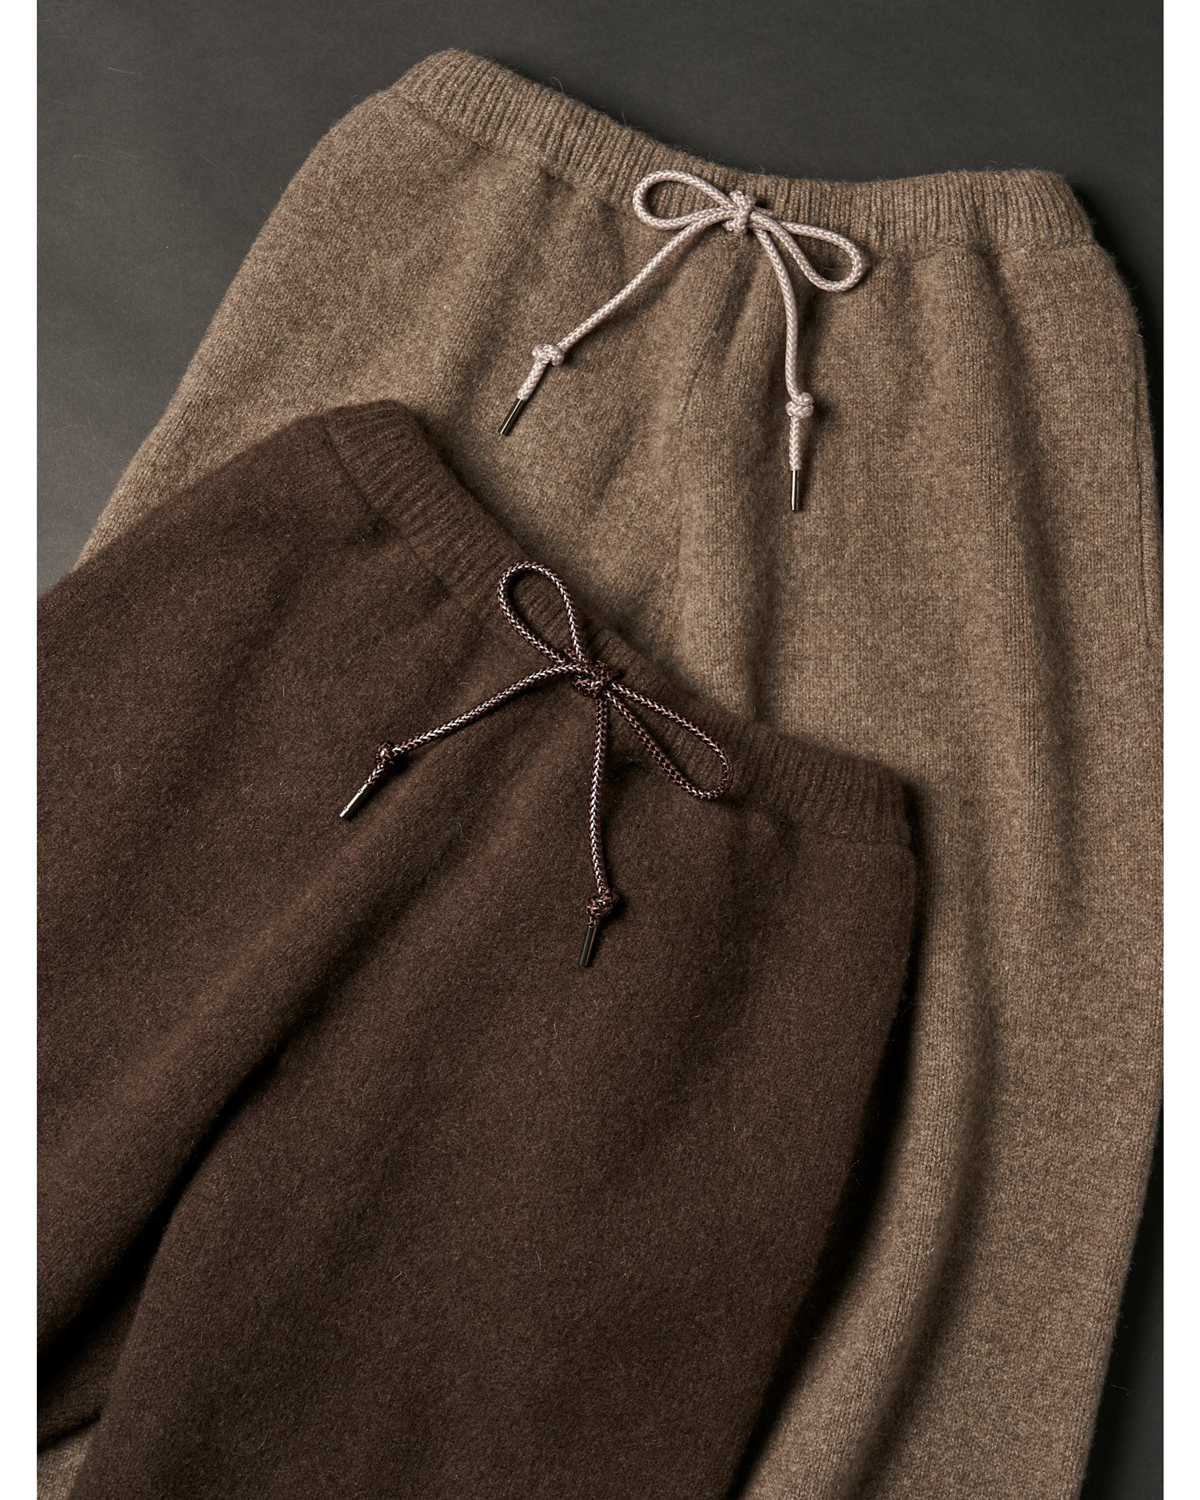 Innocent YAK Circular Knitting Pants - Brown｜walenode